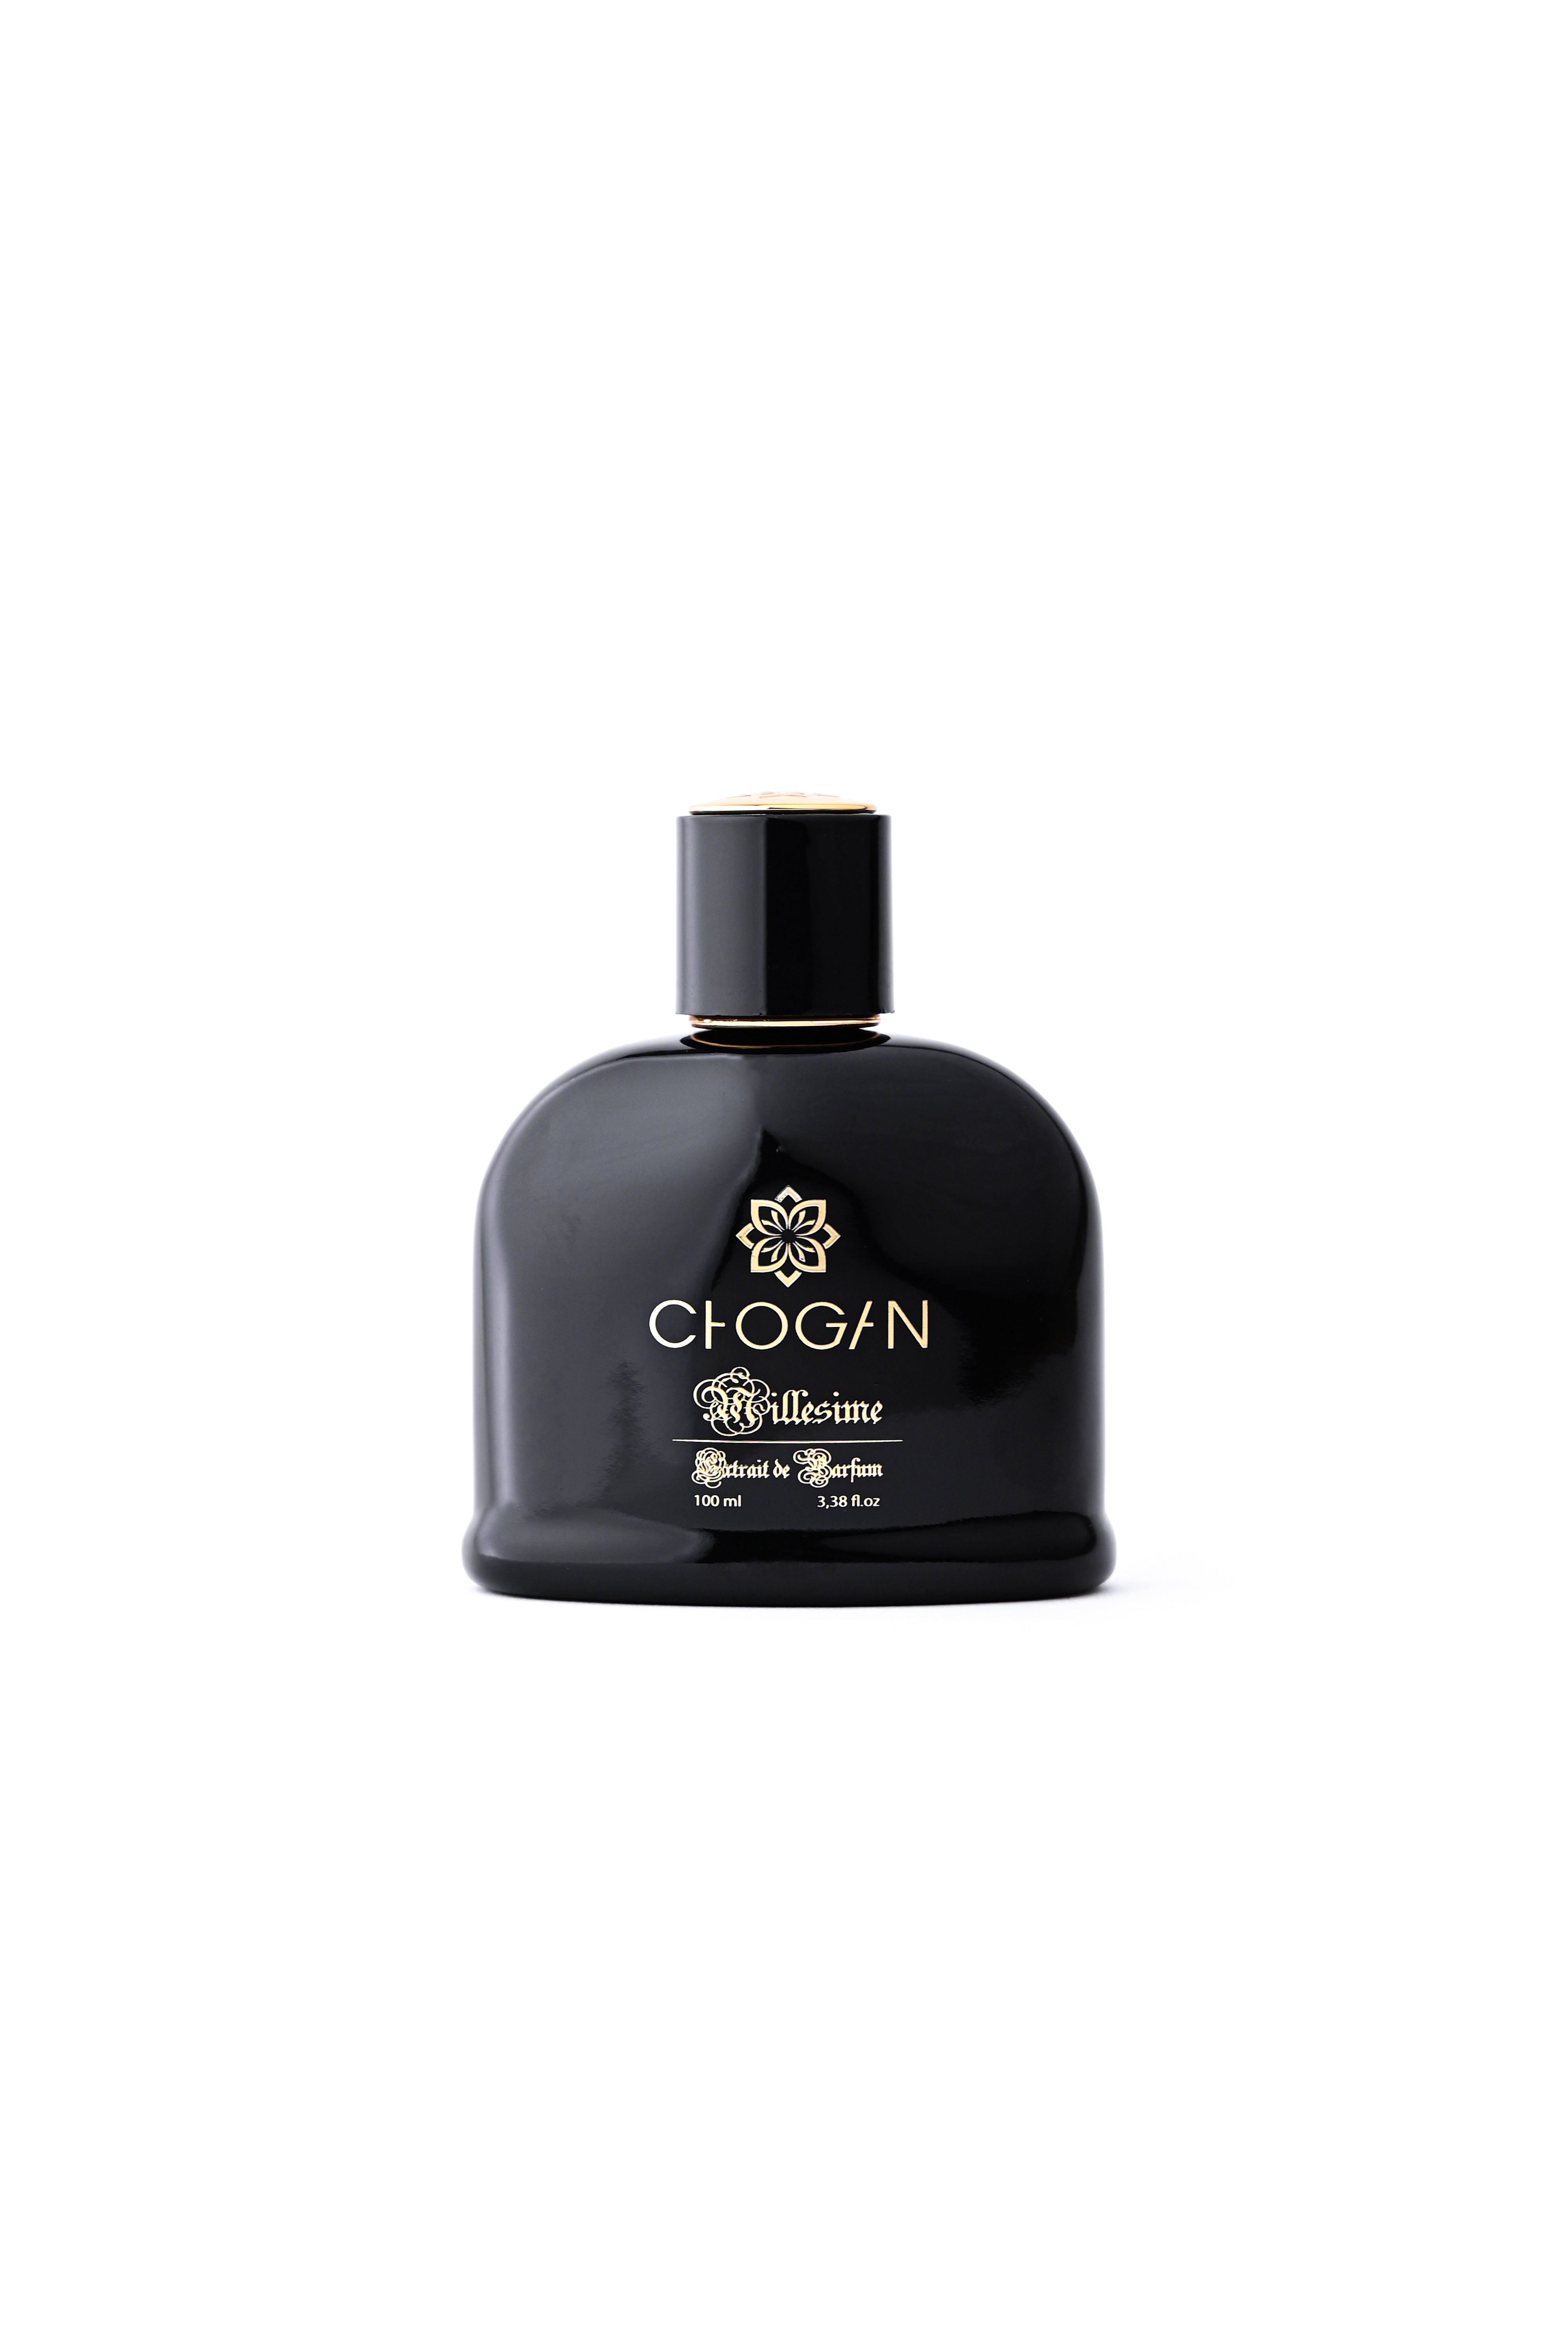 Chogan Men's Fragrance - 61 Aquatic Woody 